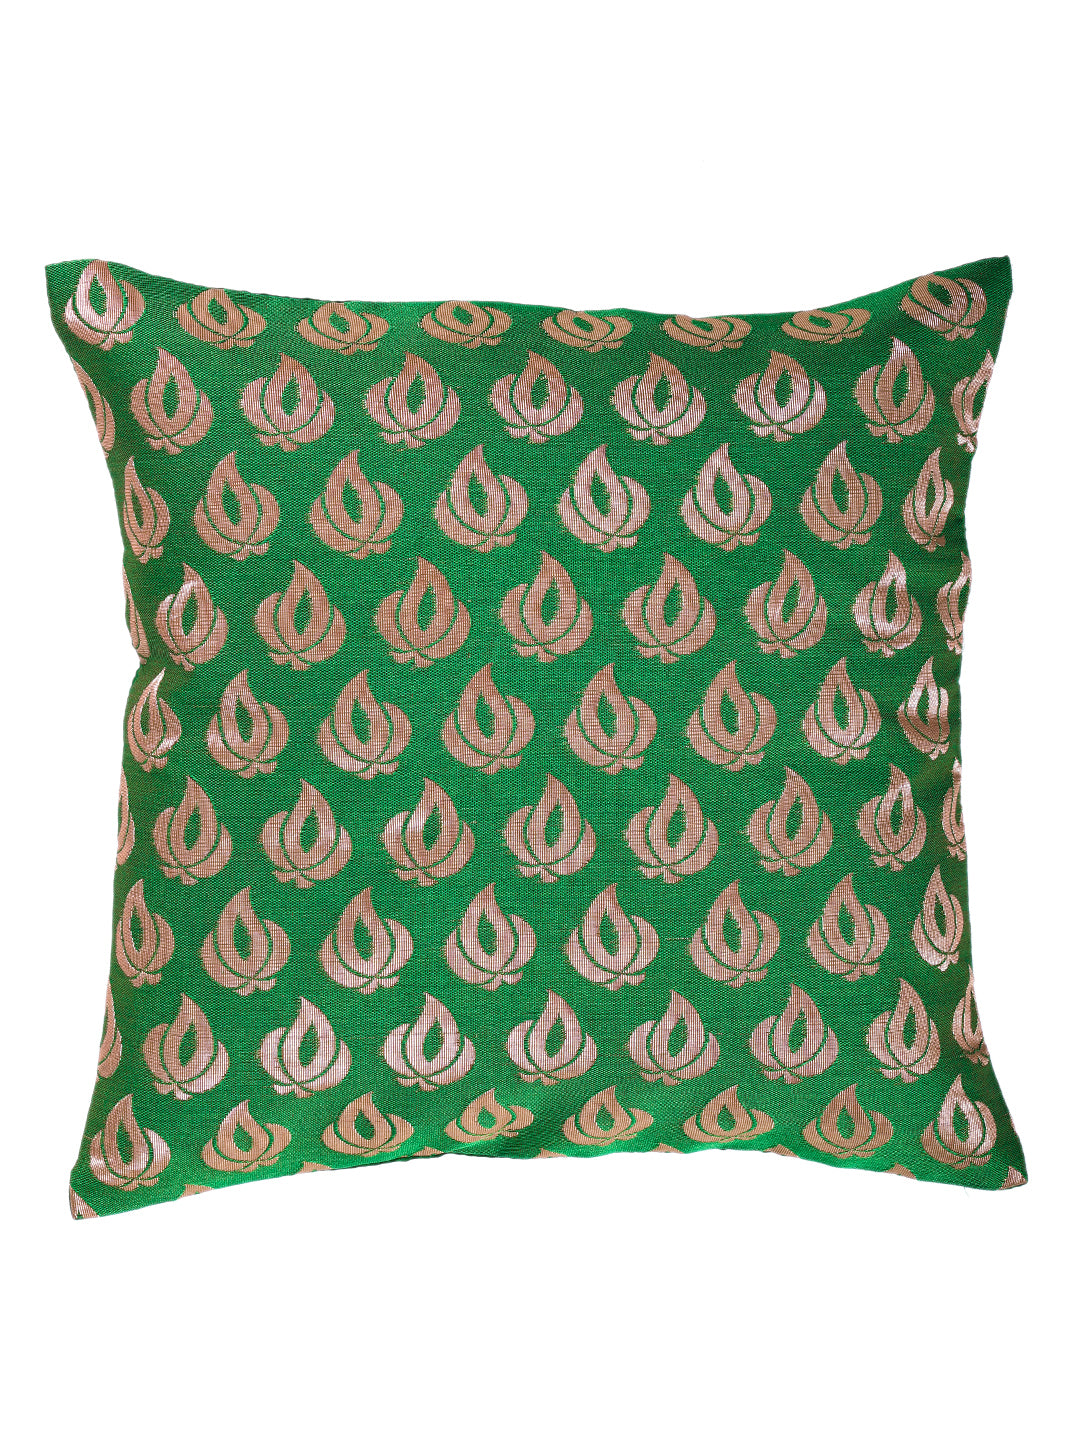 Silkfab Set 0f 5 Decorative Silk Cushion Covers (16x16) Flame Green - SILKFAB